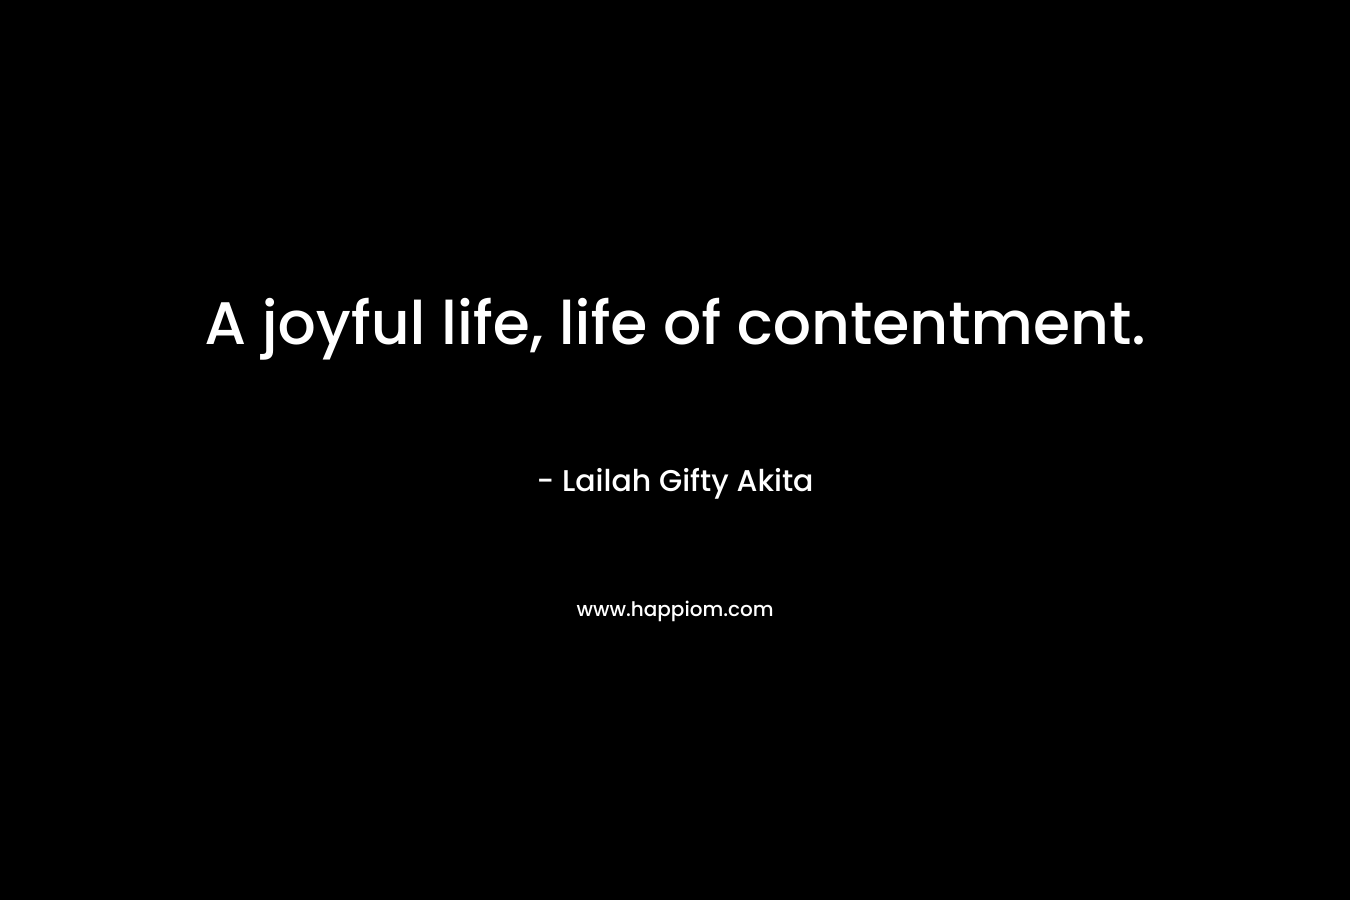 A joyful life, life of contentment.